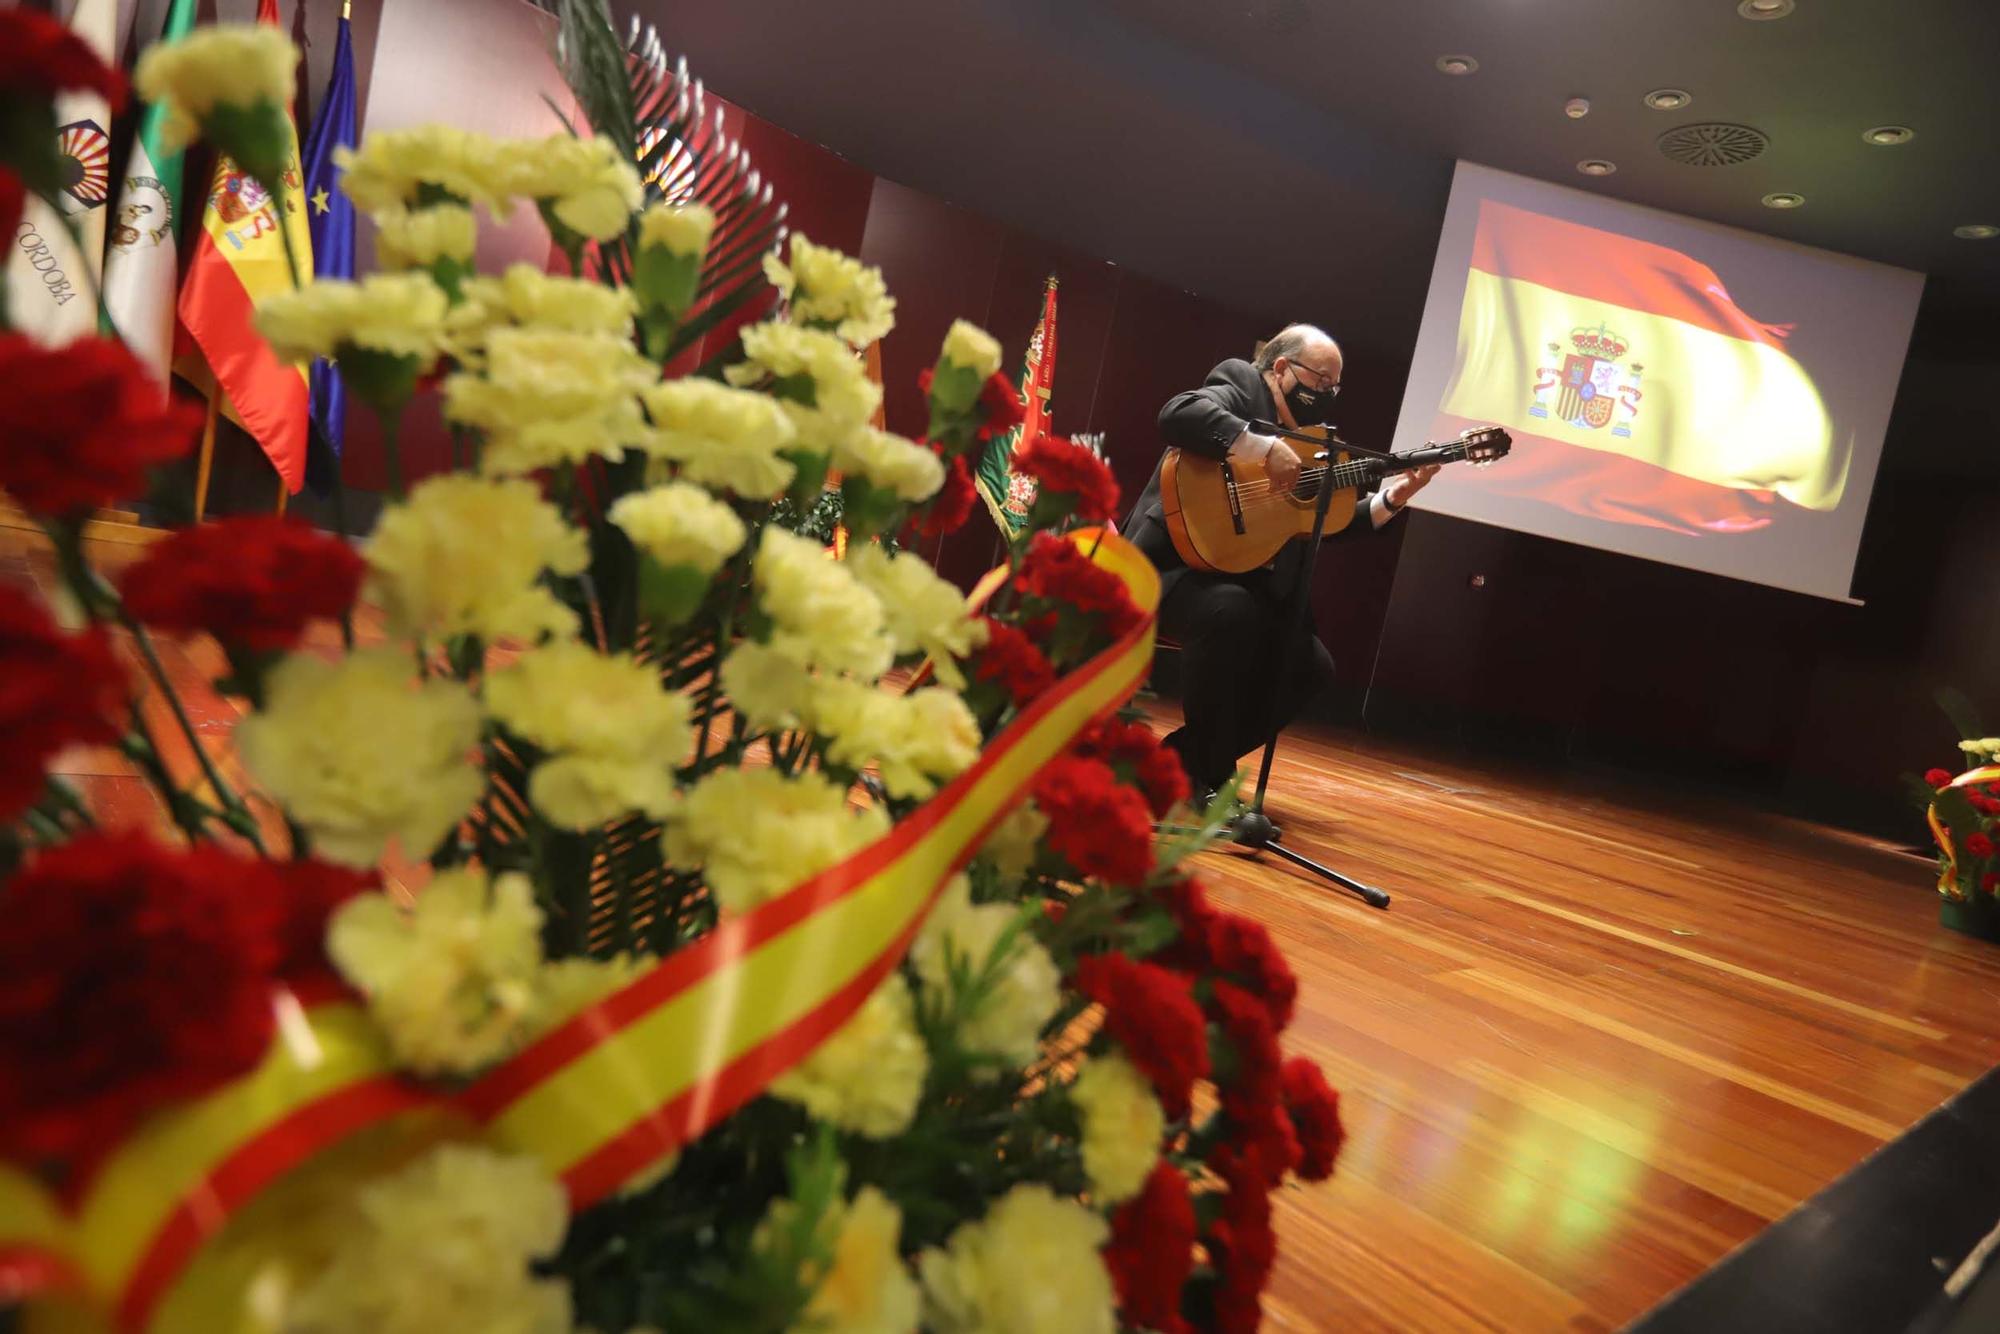 La Guardia Civil de Córdoba celebra el 178 aniversario del cuerpo